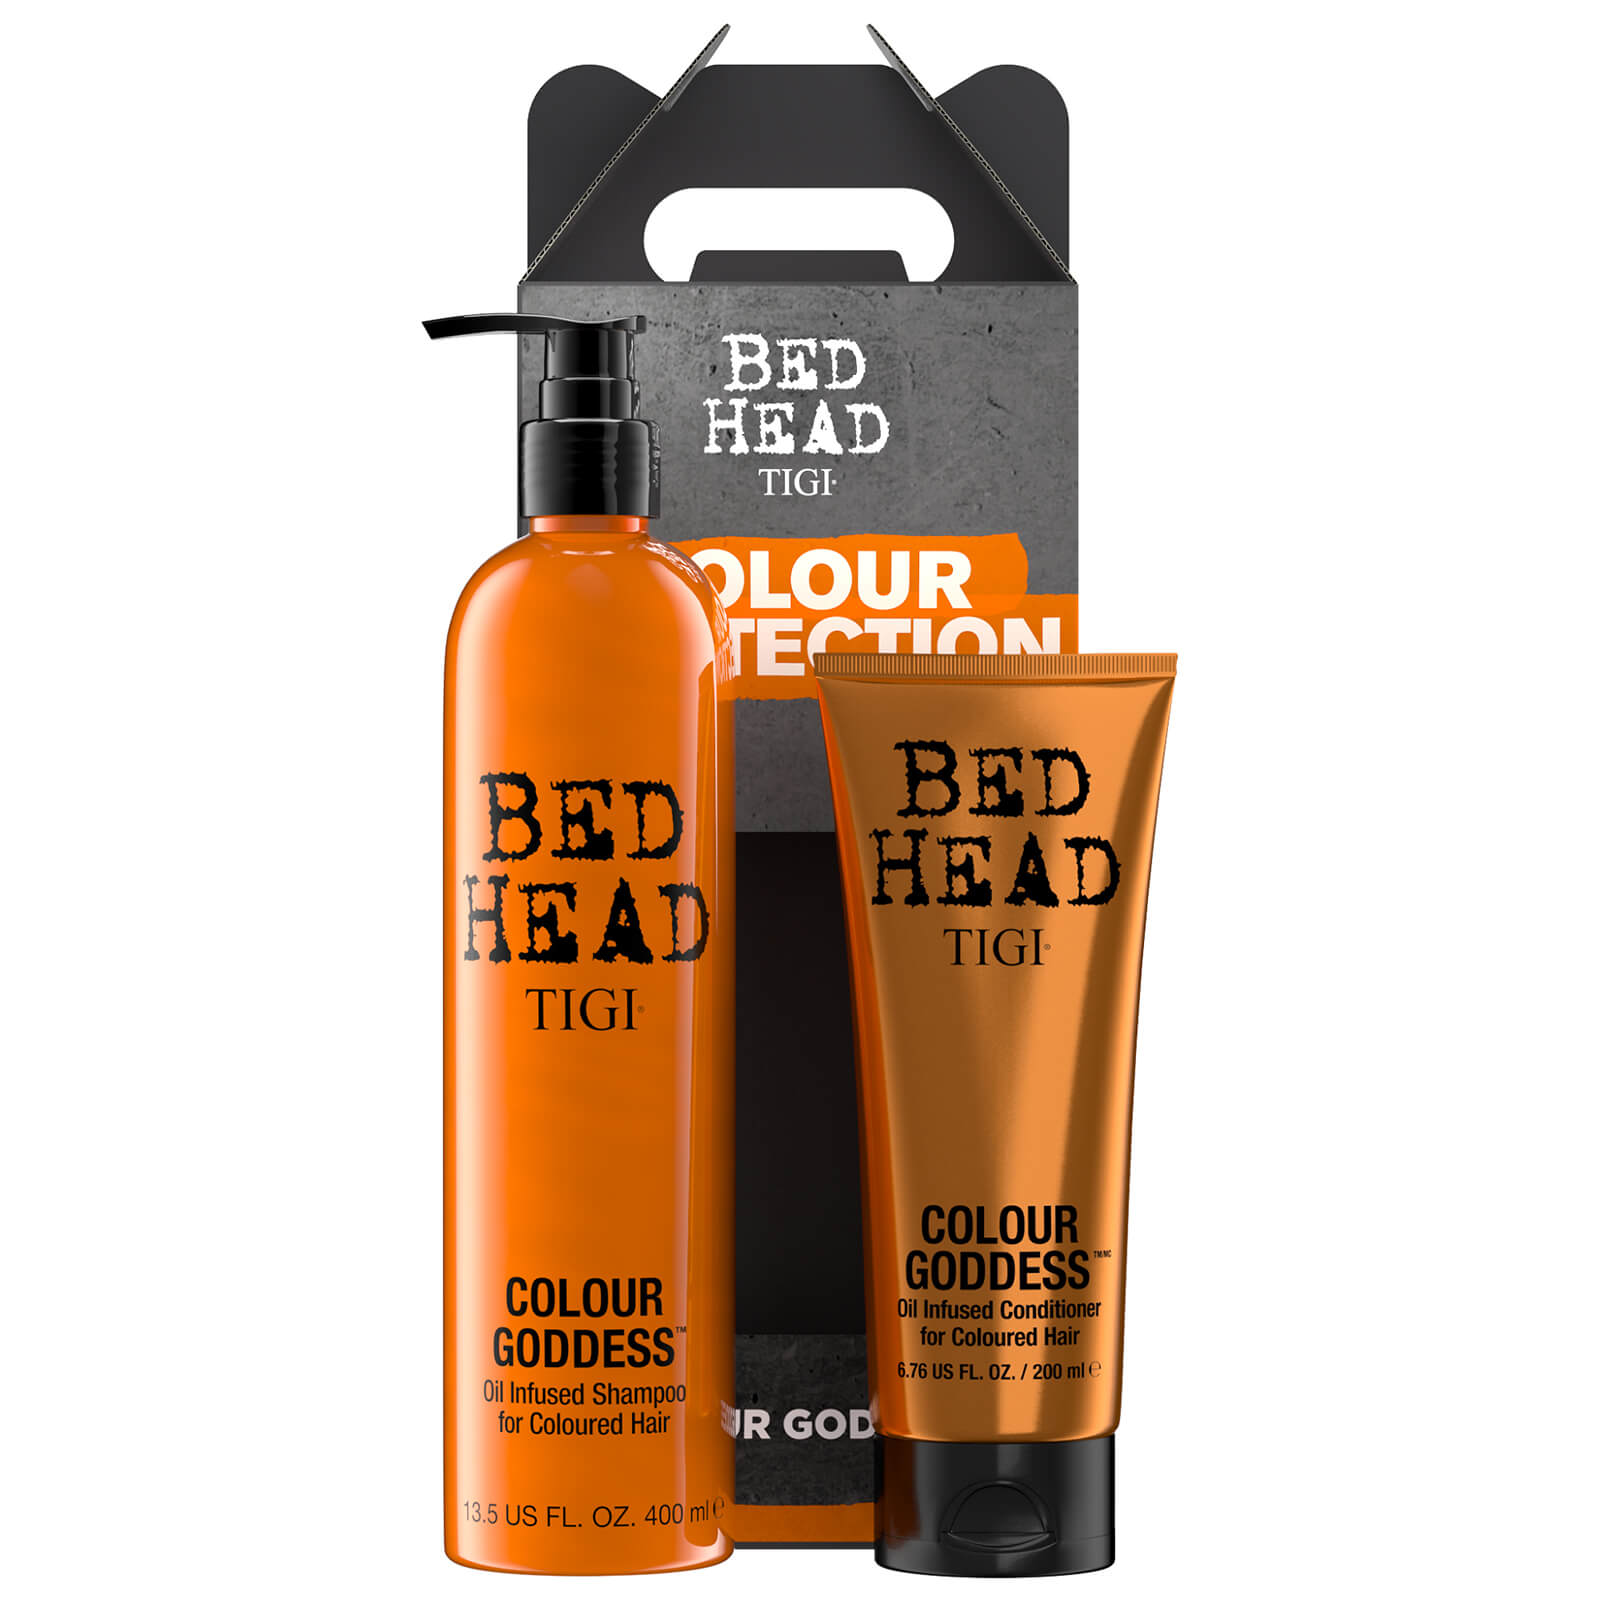 TIGI Bed Head Colour Goddess Shampoo and Conditioner Duo for Coloured Hair